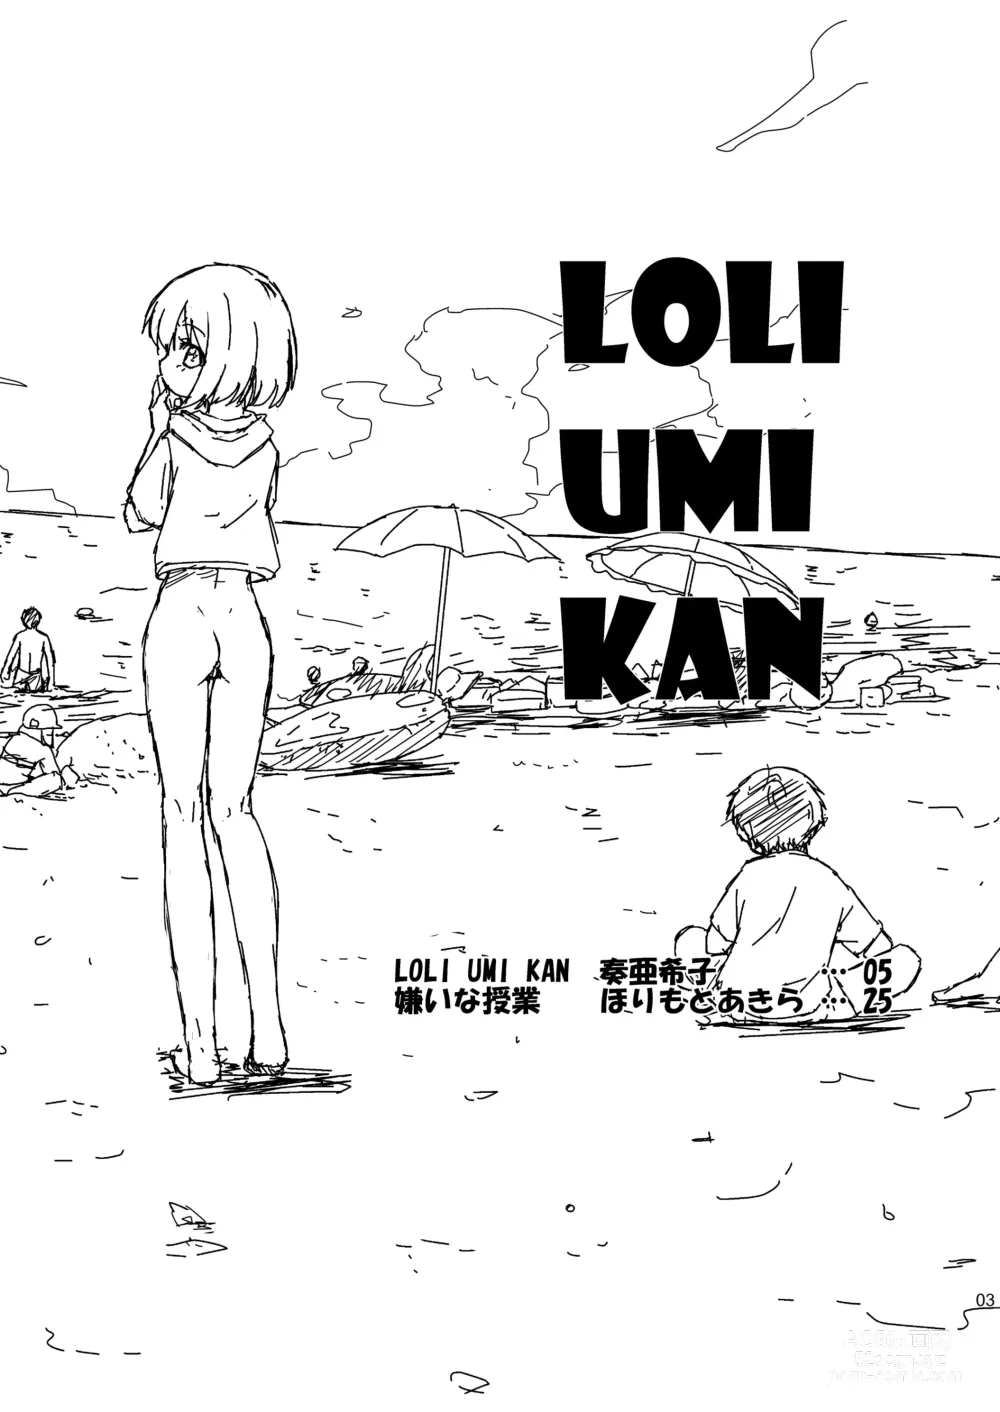 Page 3 of doujinshi Loli Umi Kan